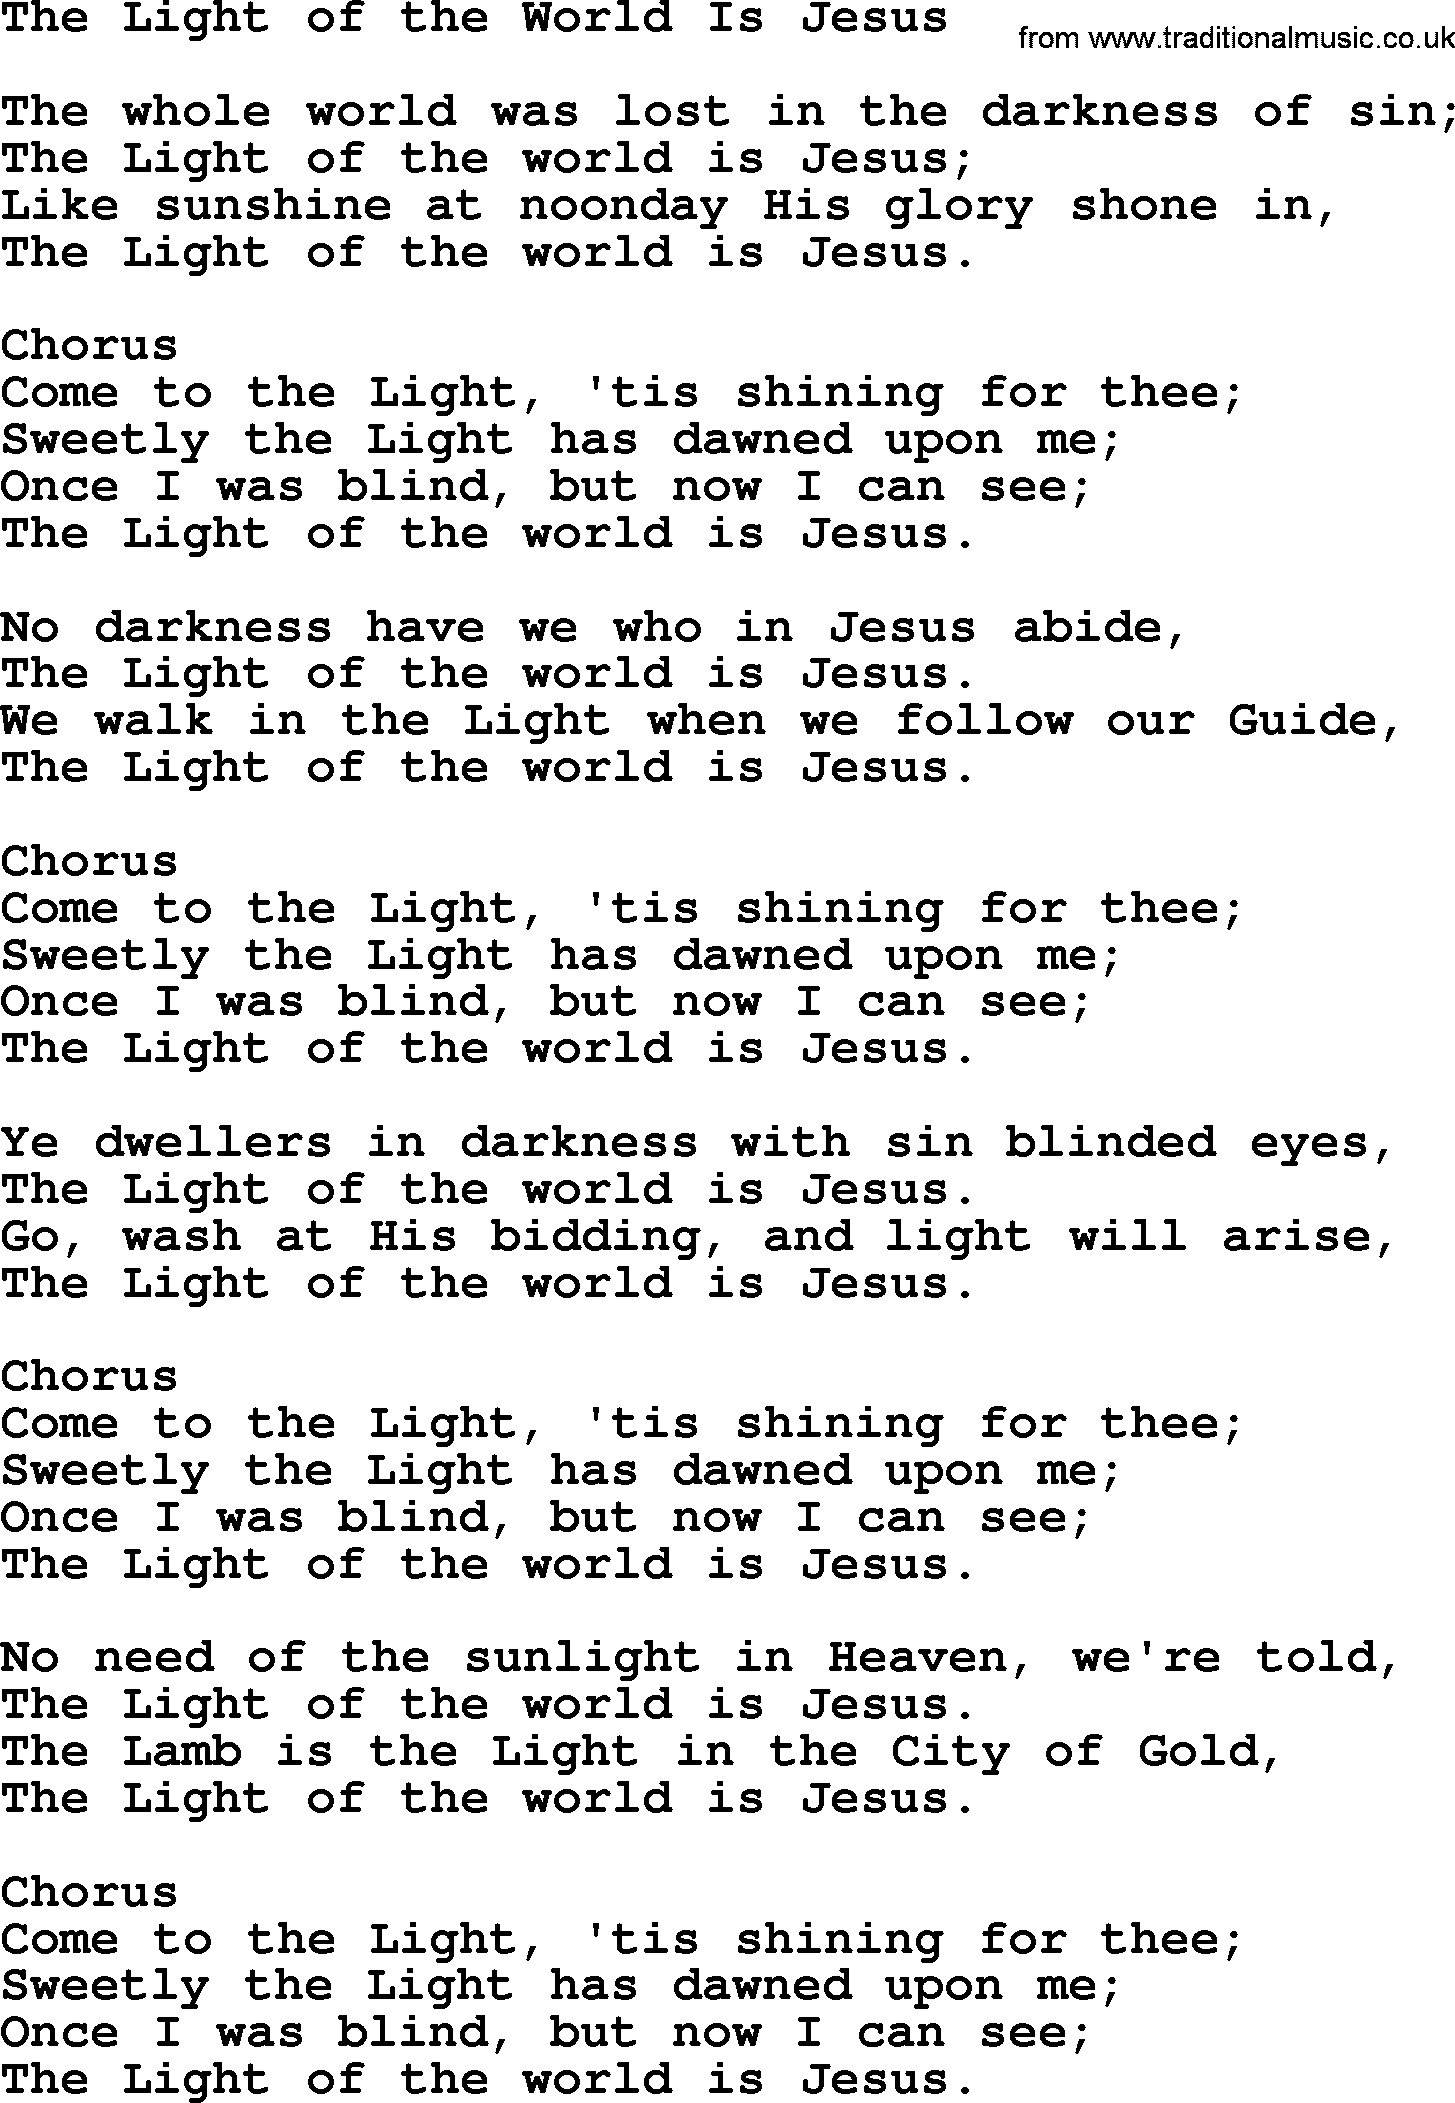 blinded by the light lyrics